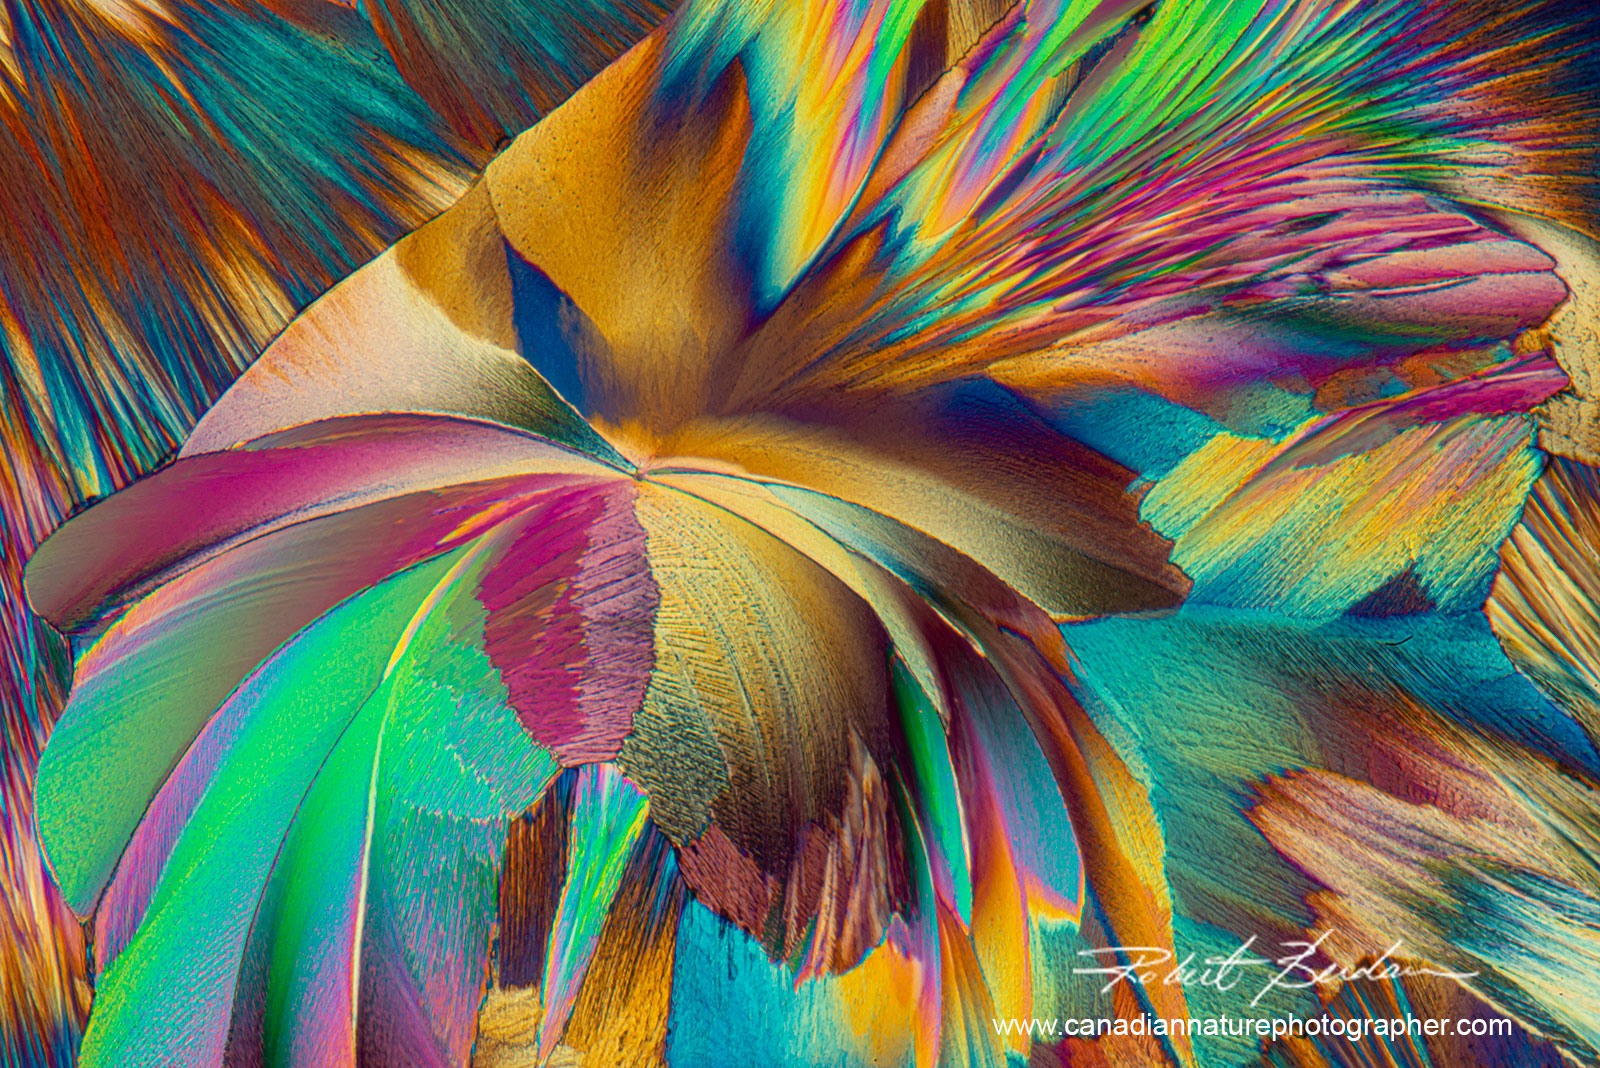 Red wine crystals (CA1) from Napa Valley polarized light microscopy 100X by Robert Berdan ©